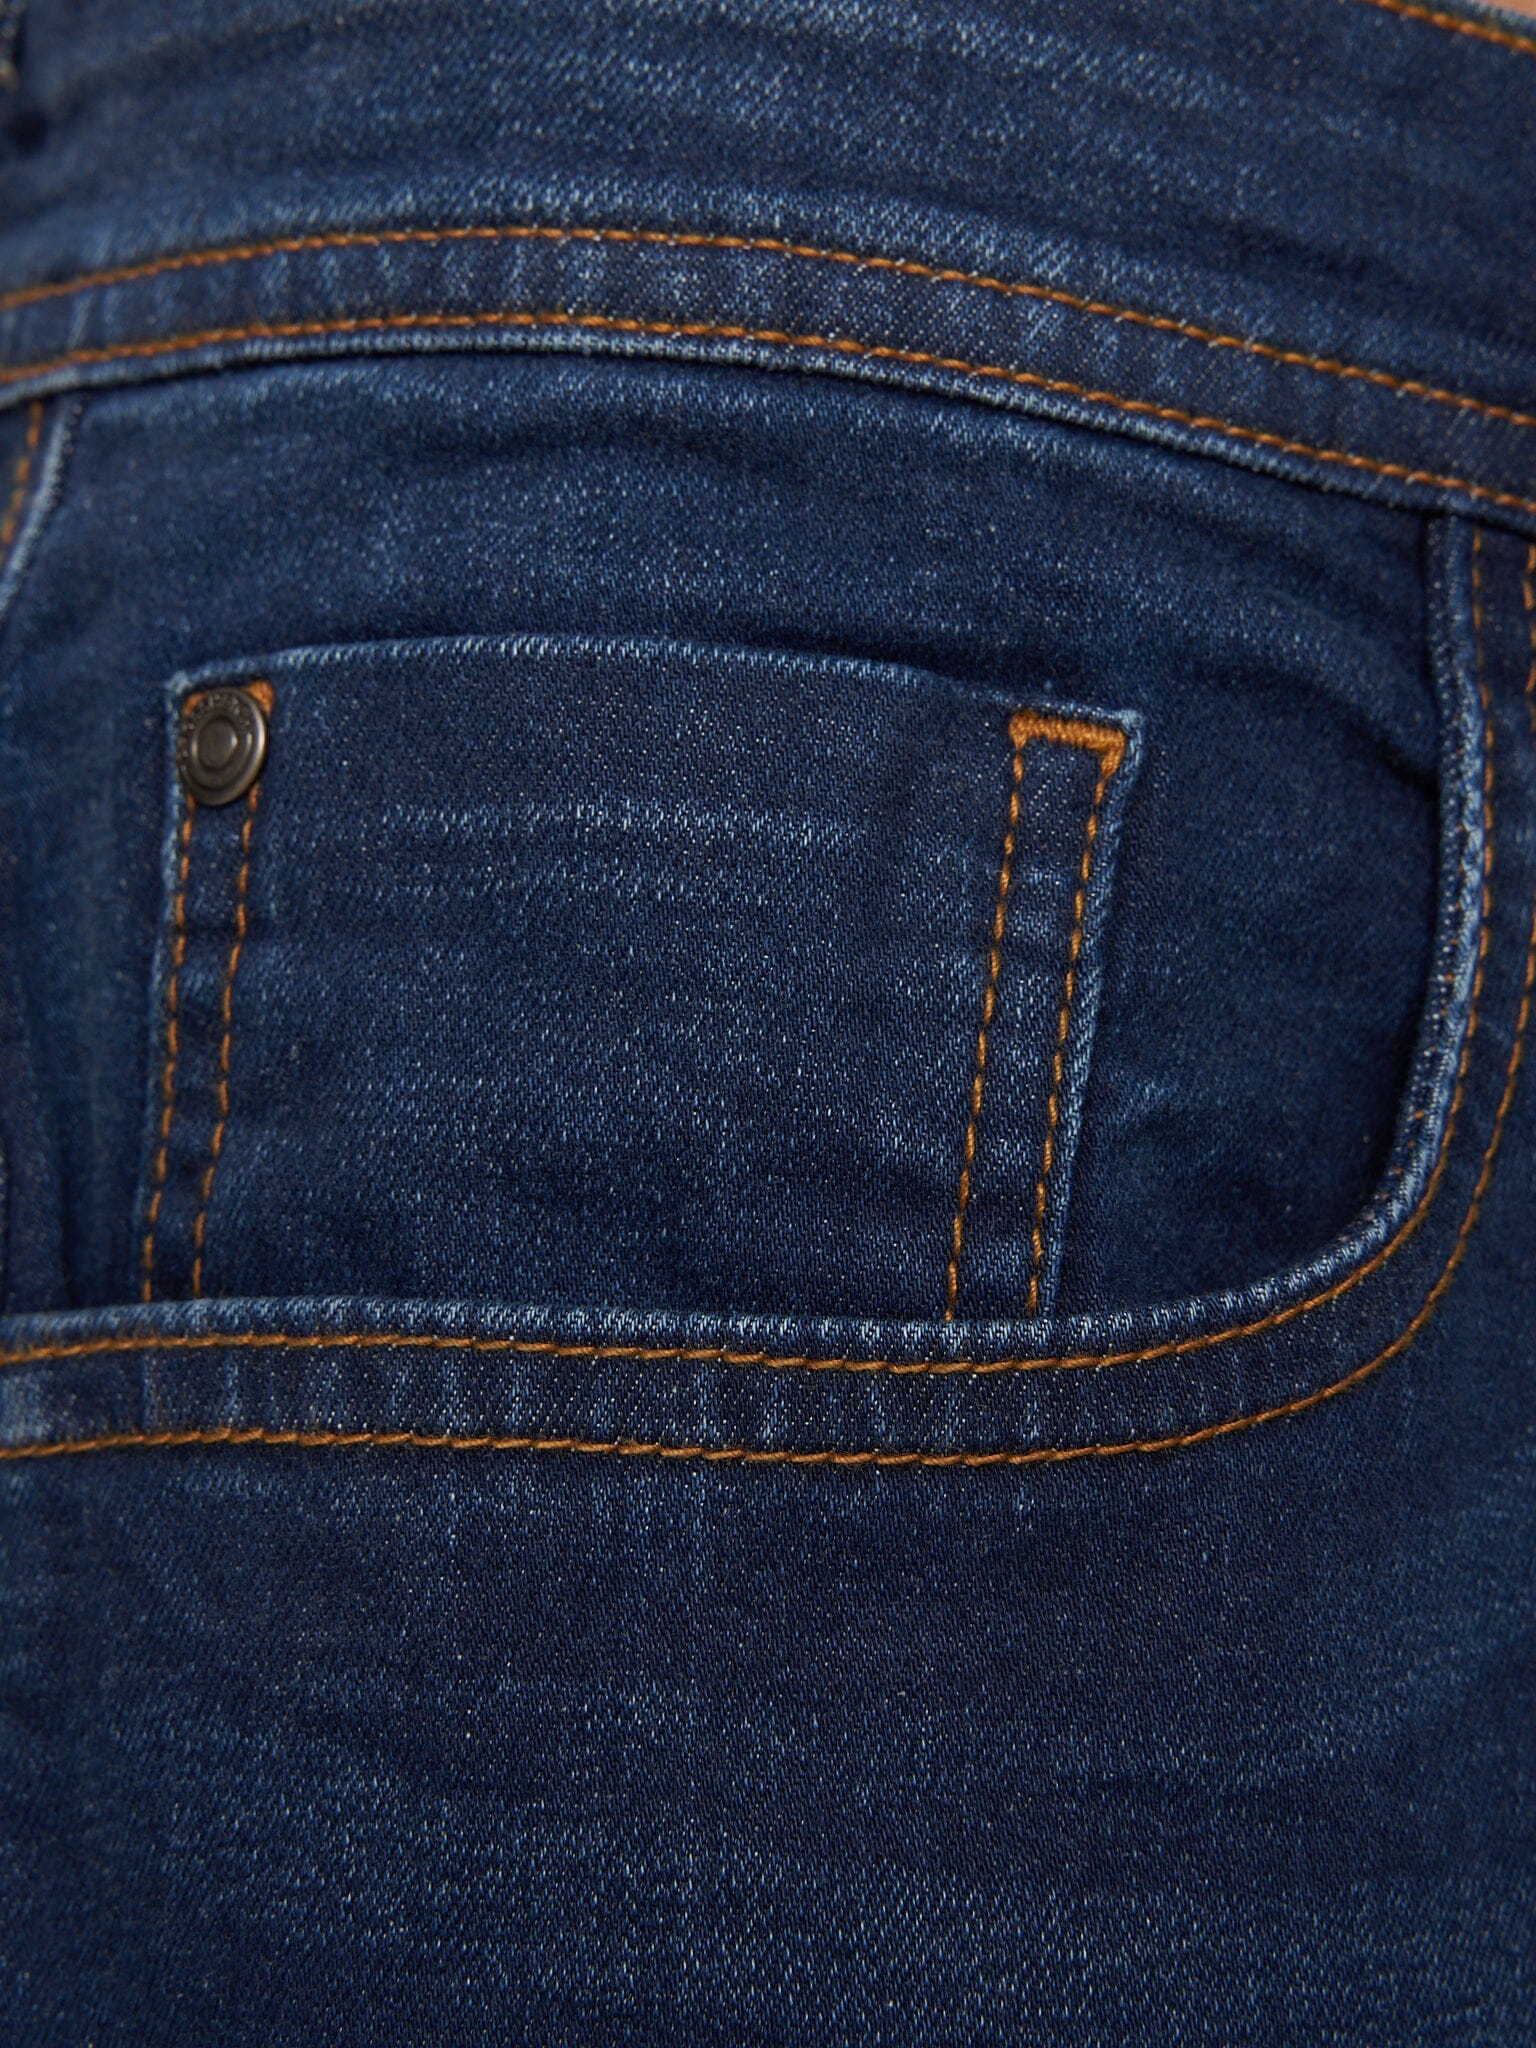 Winsbury Bootcut Jeans Dark Wash